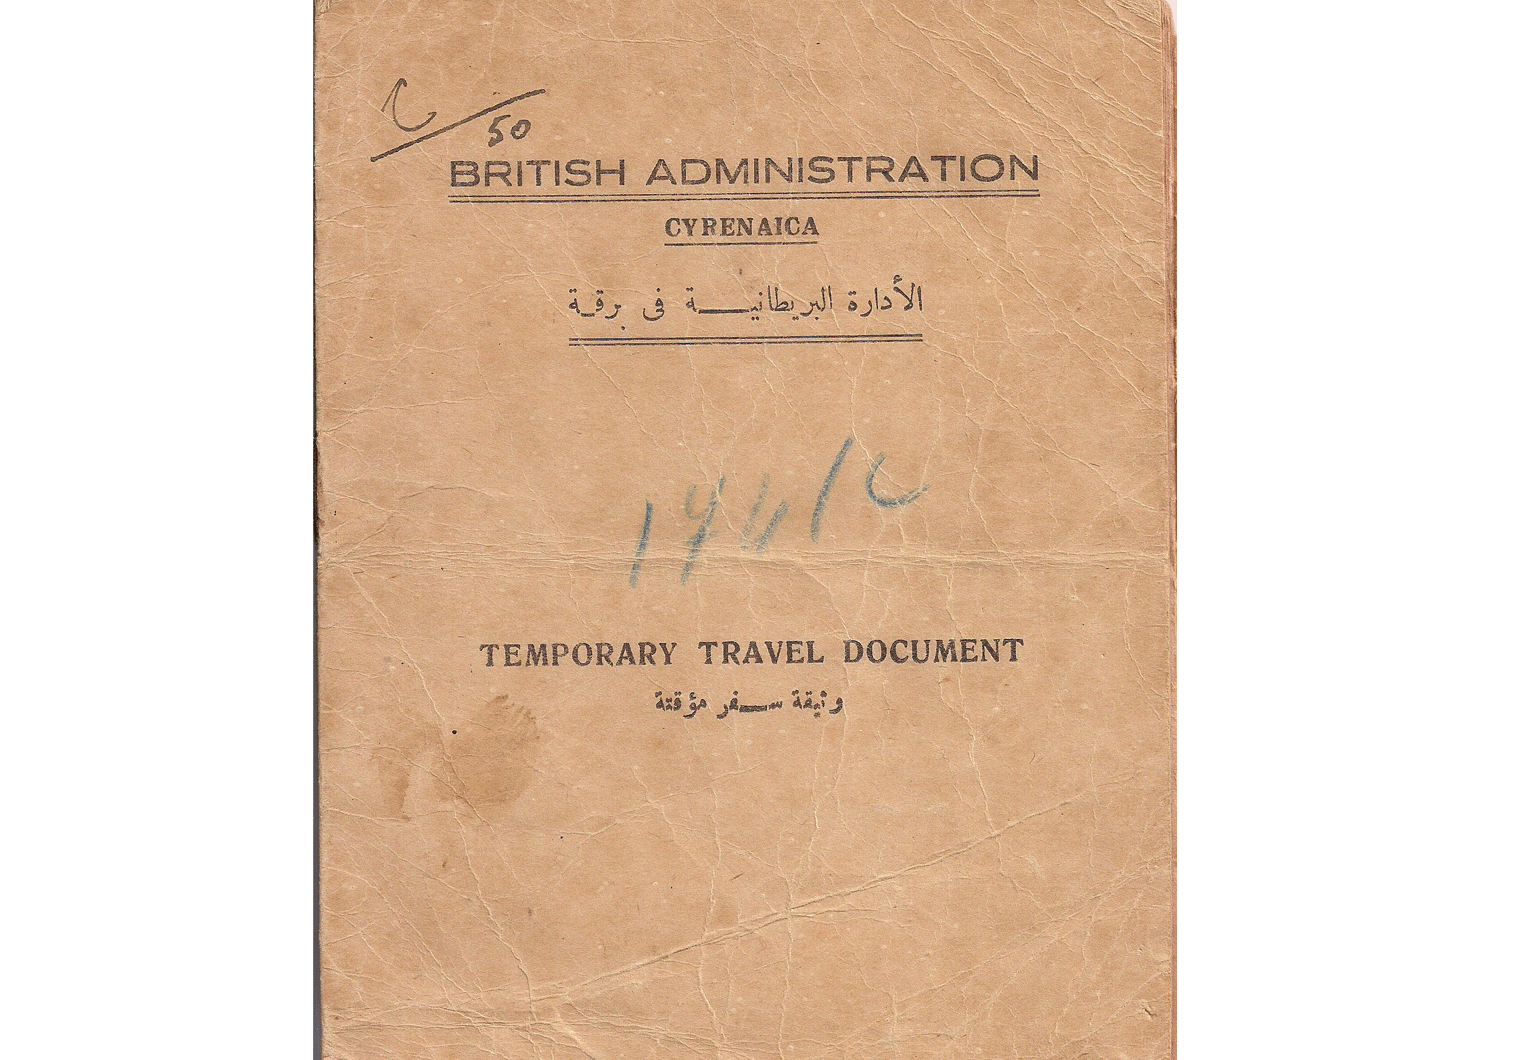 British Military Administration travel document